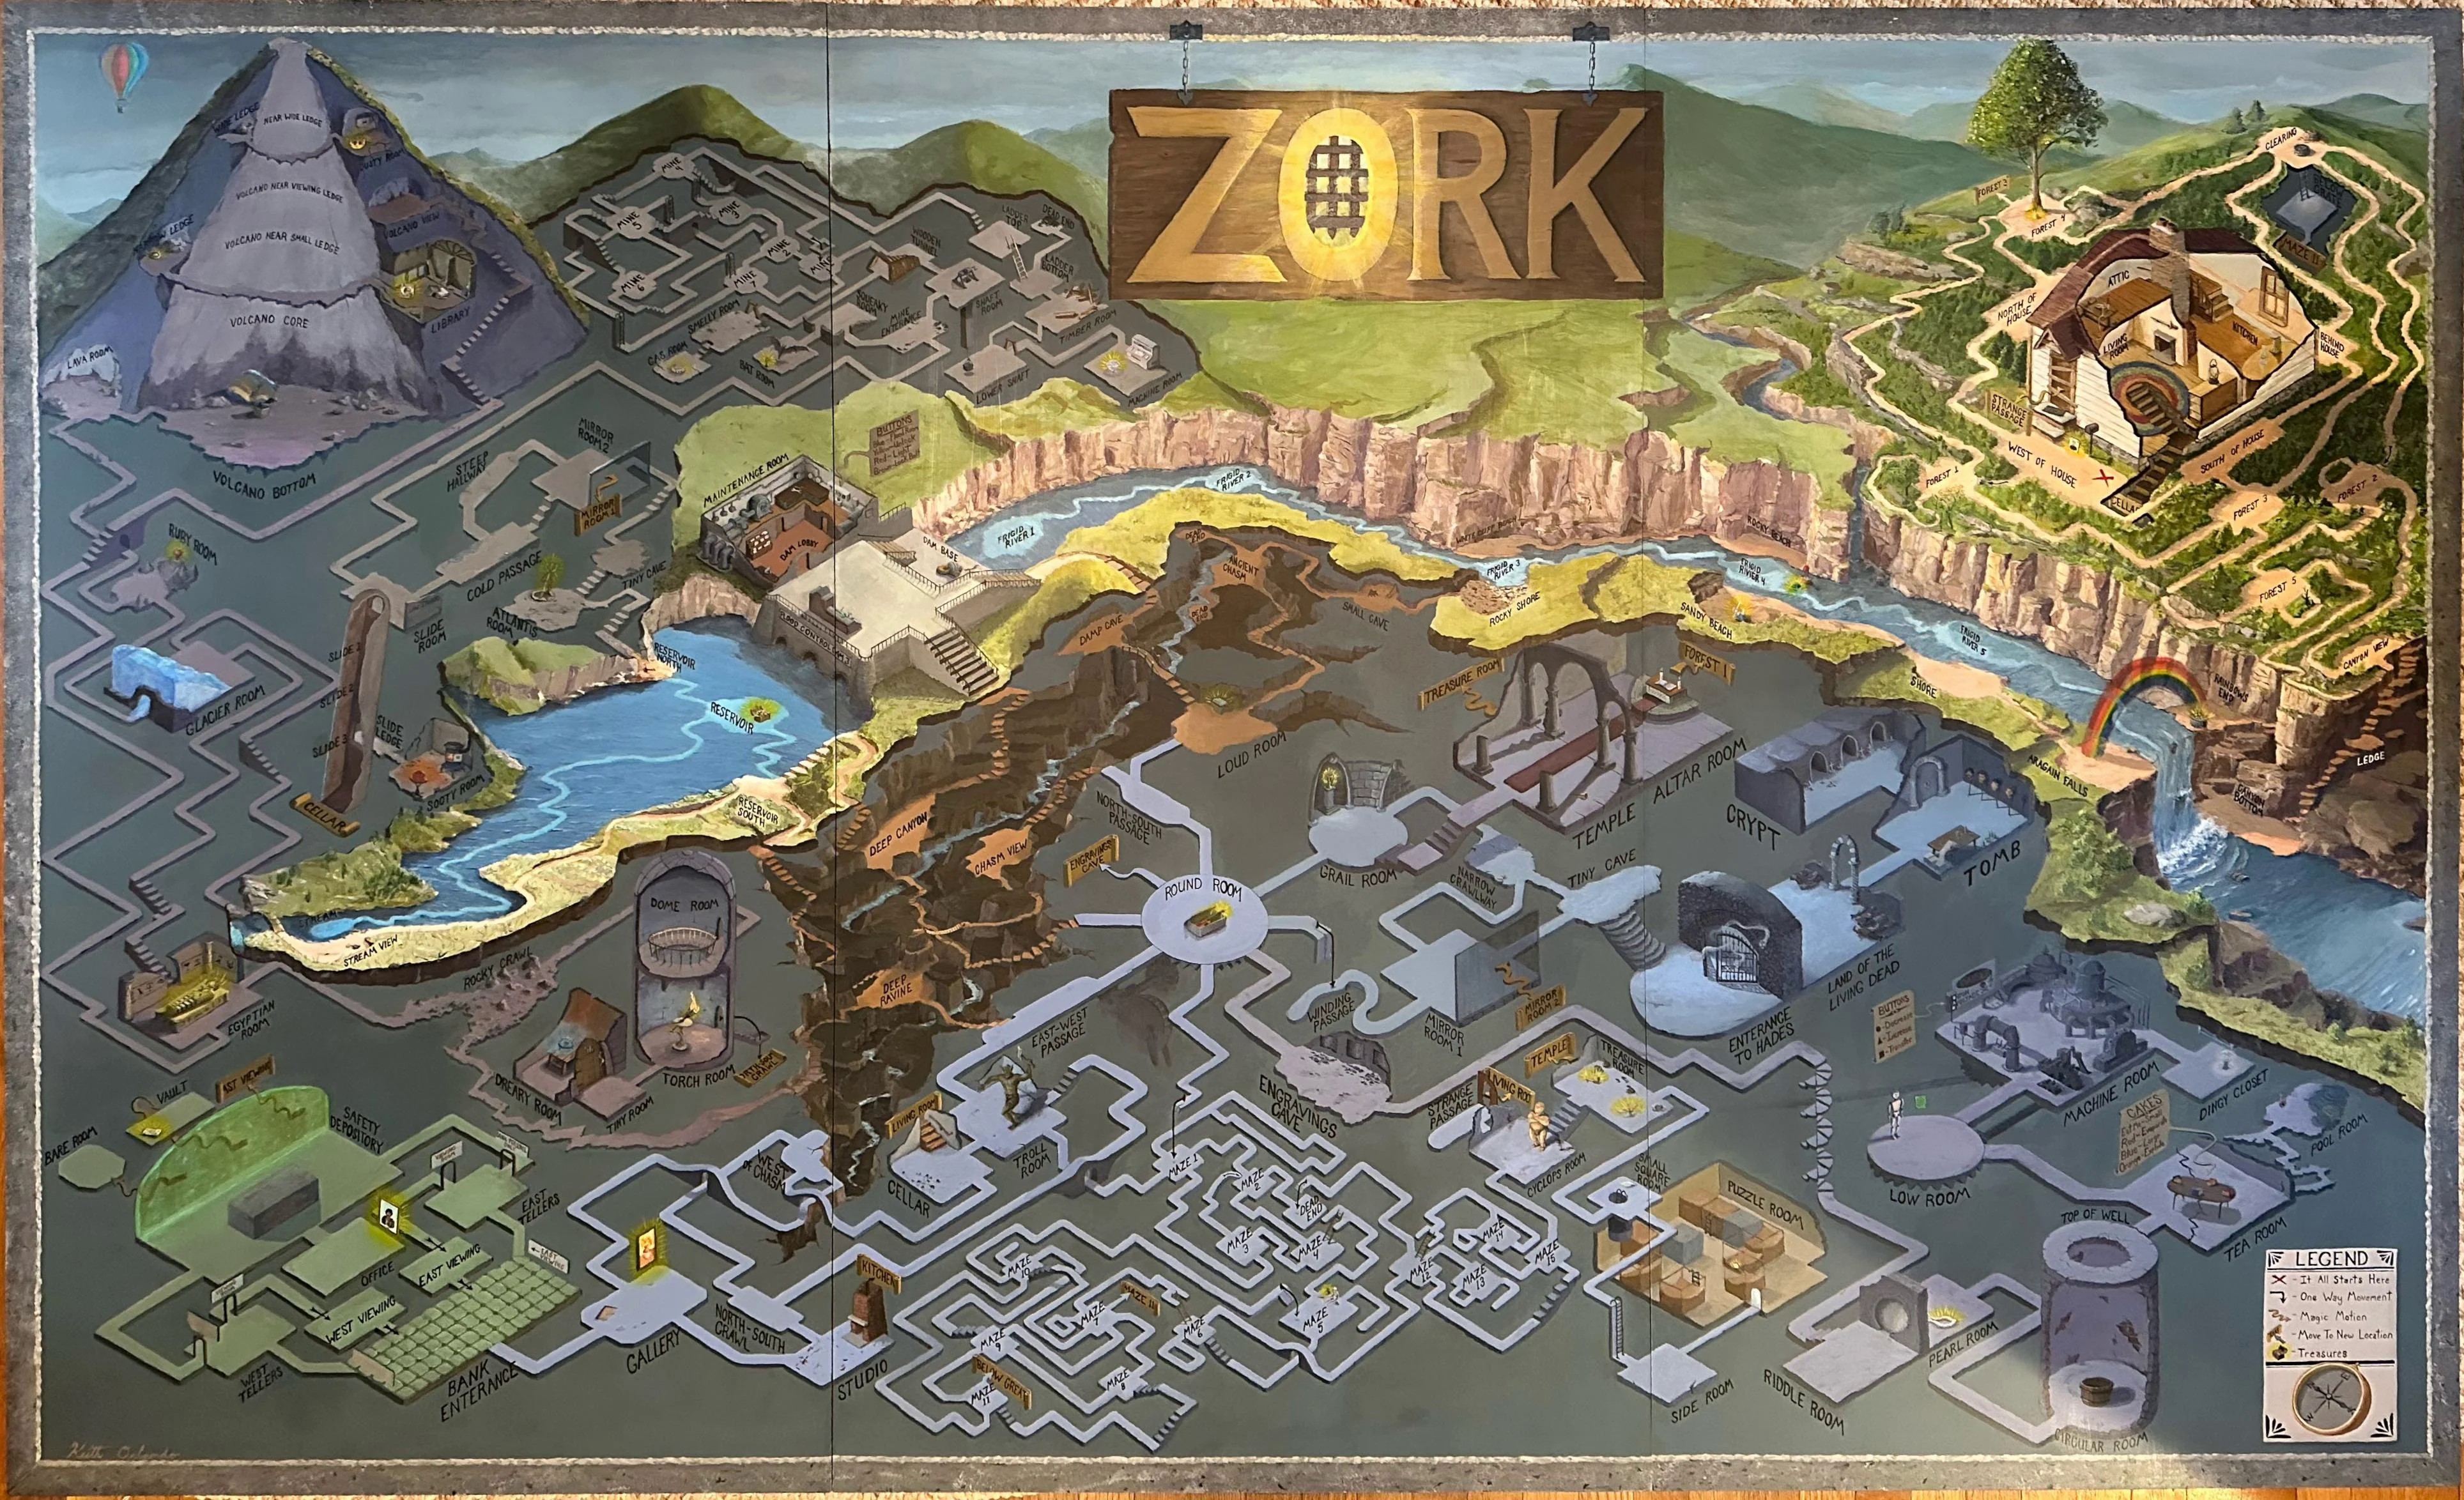 Zork Map